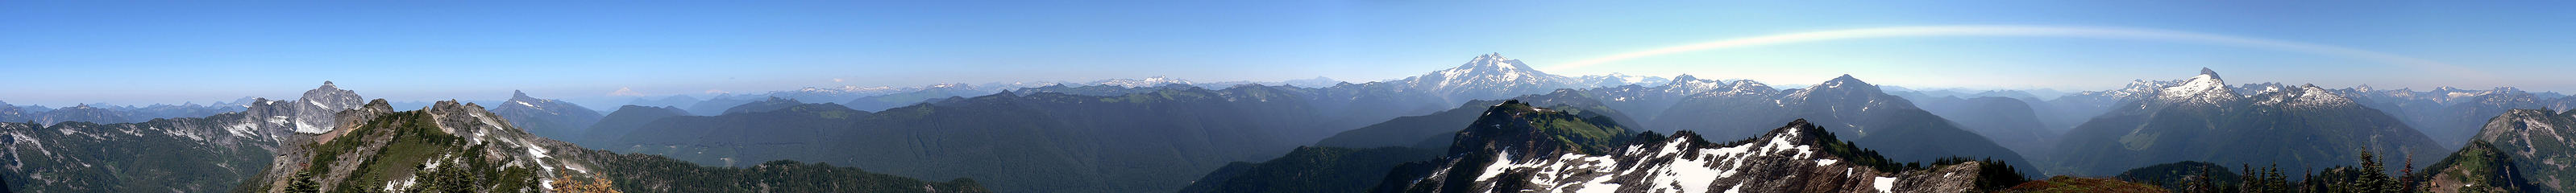 Breccia Peak Panorama, taken 8.5.06 from the summit of Breccia Peak.